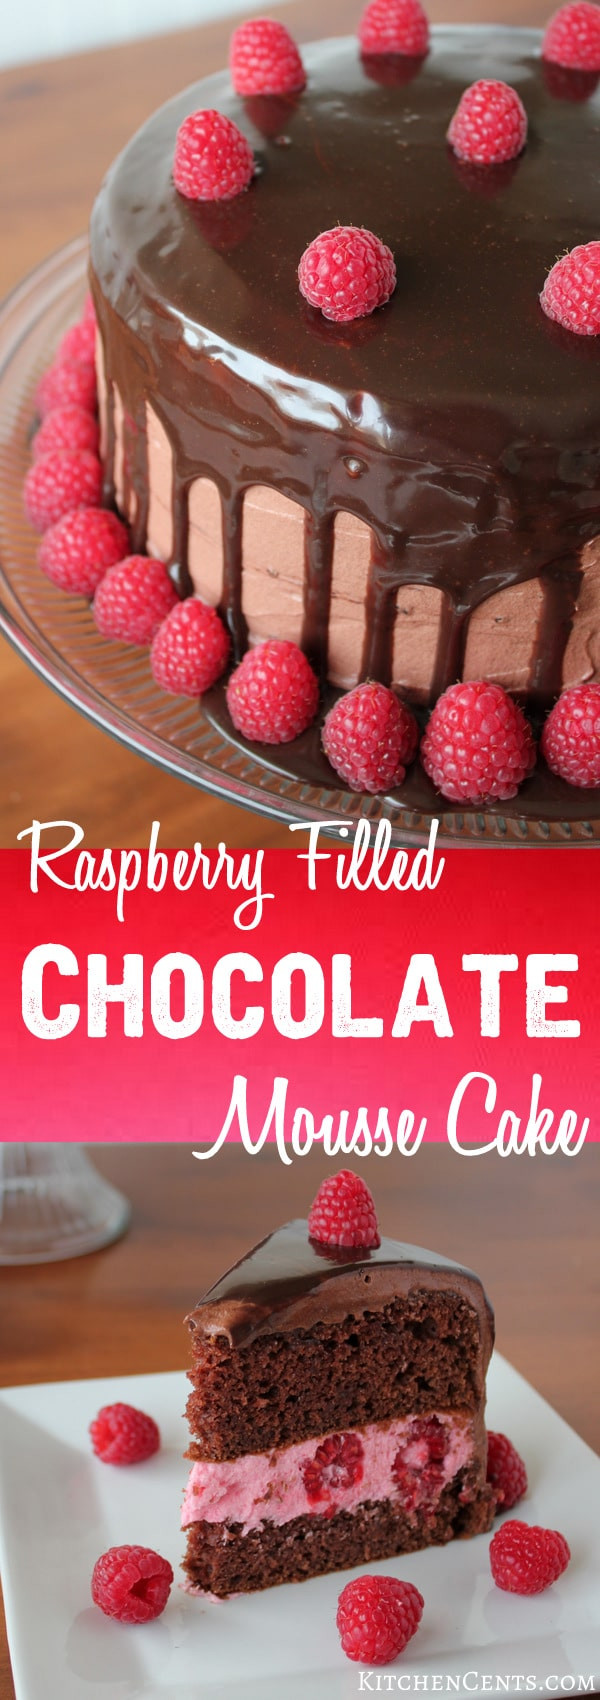 Raspberry Mousse Filling For Wedding Cake
 Raspberry Filled Chocolate Mousse Cake with chocolate ganache